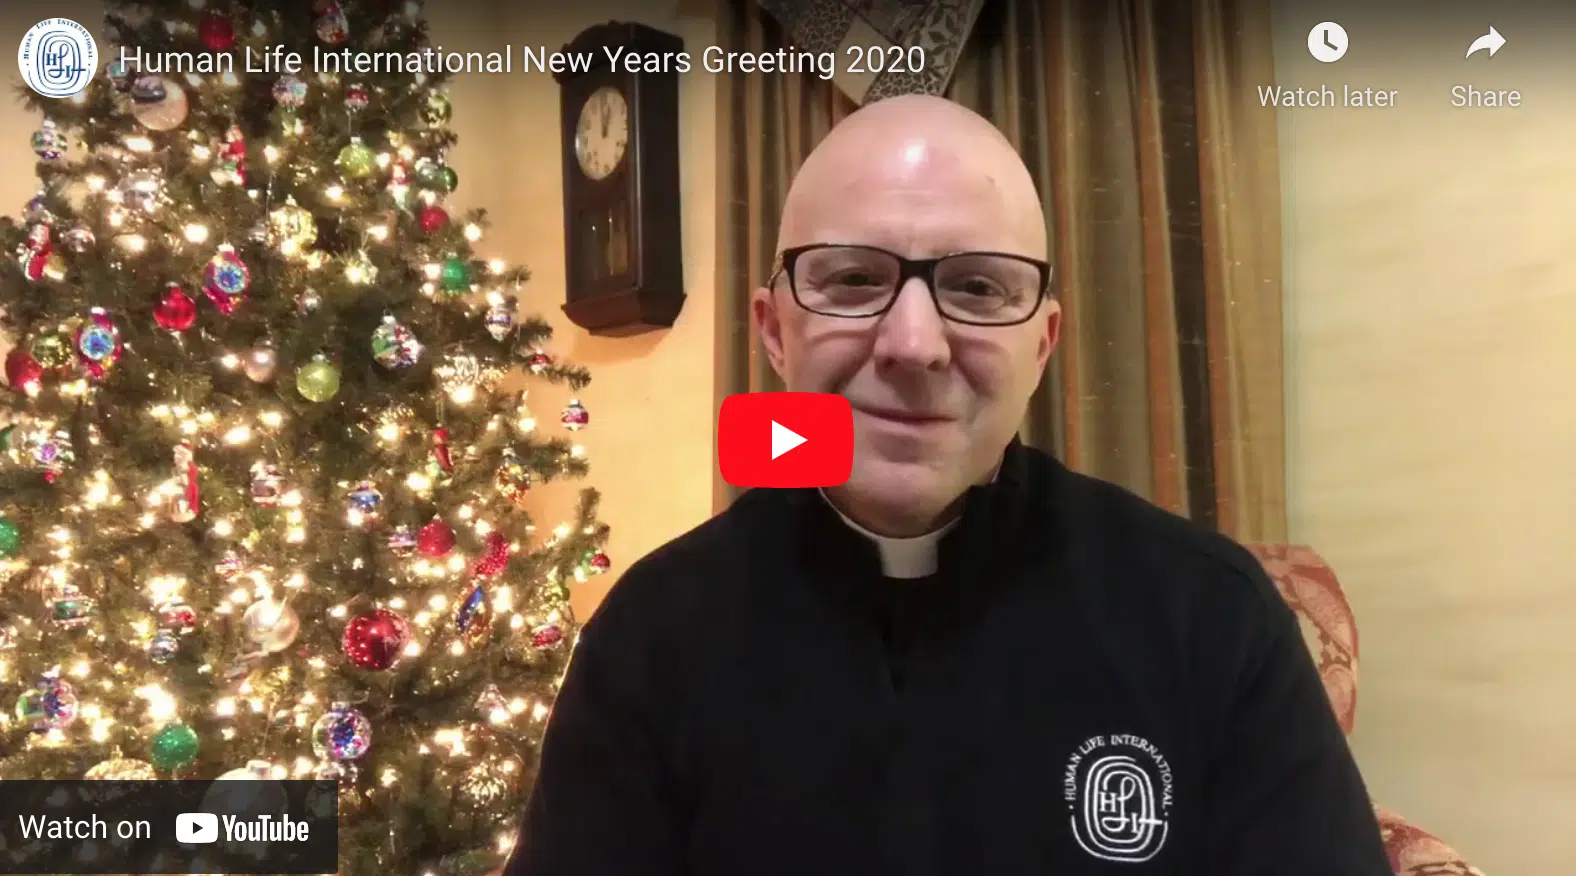 Fr Boquet's 2020 New Year's Message